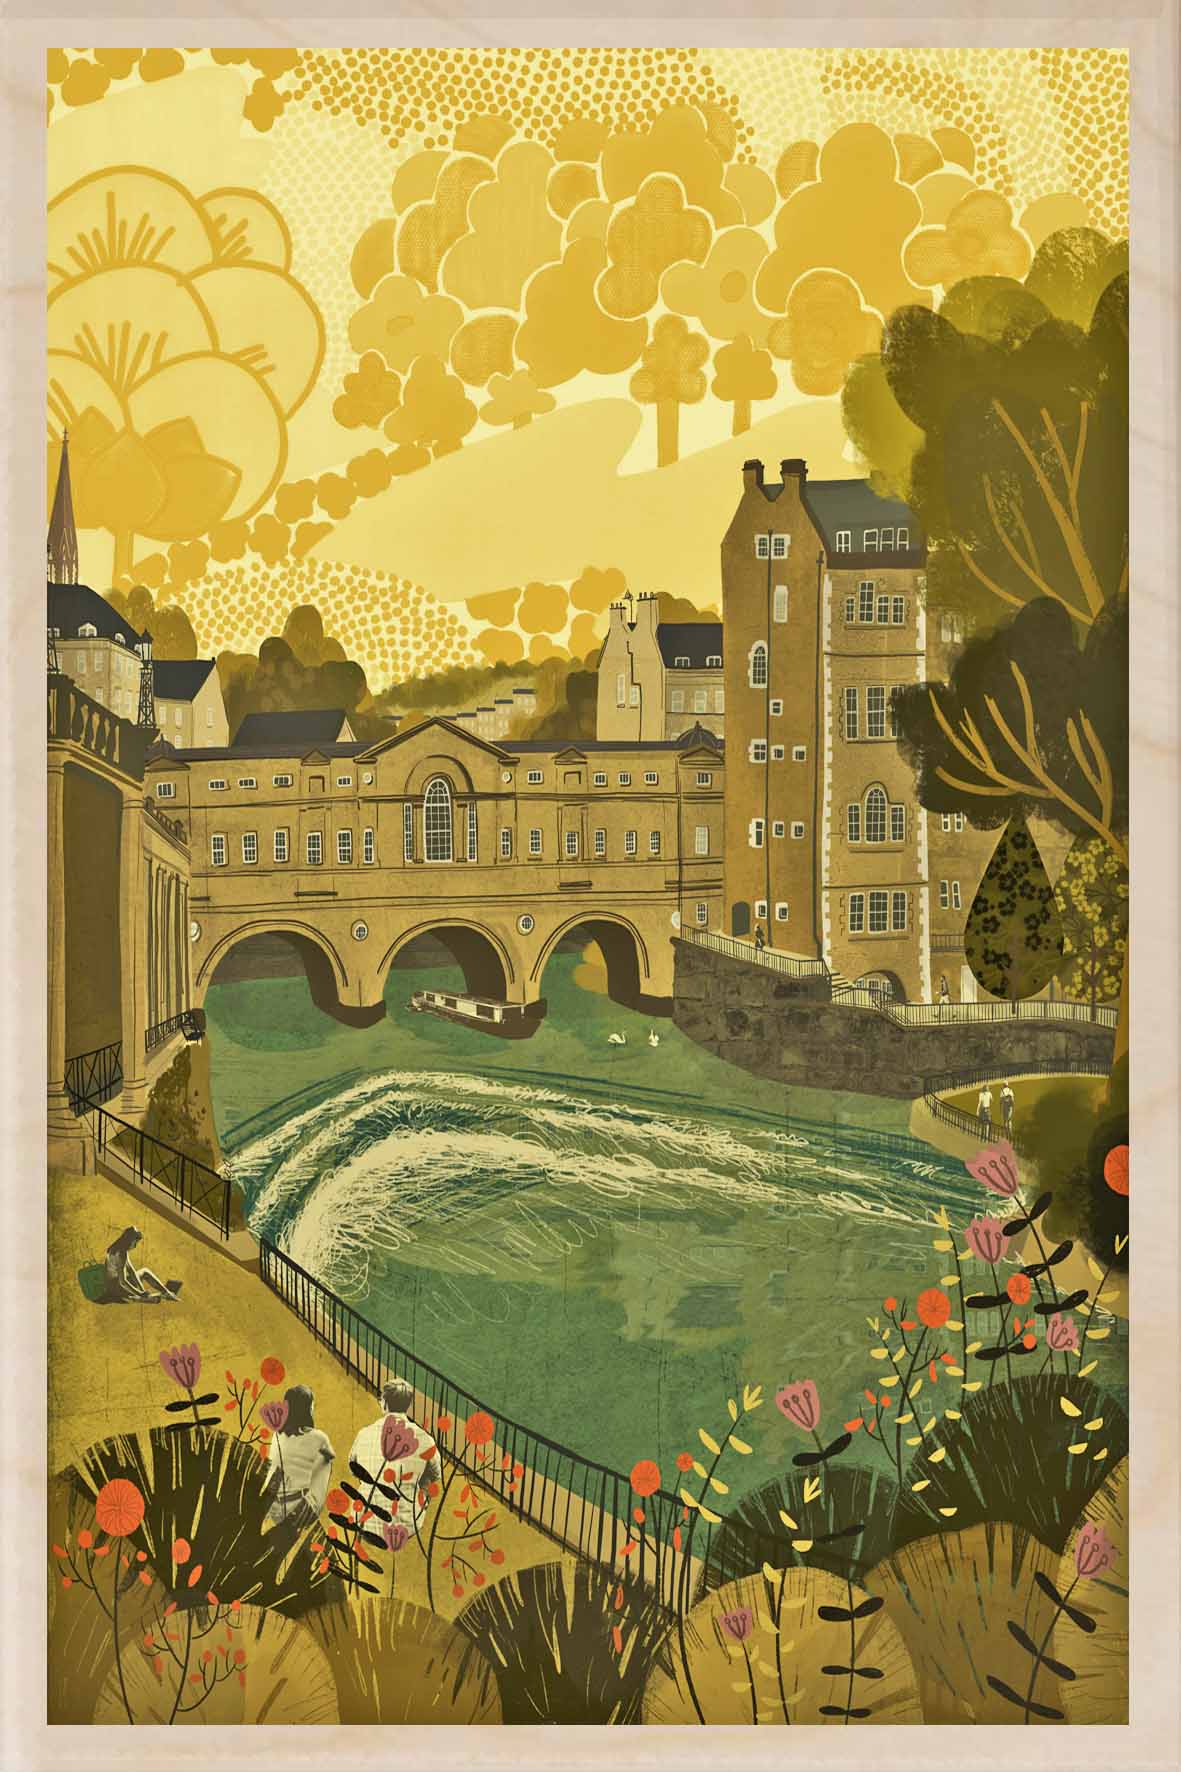 'Bath Pulteney Bridge' Wooden Postcard - Emy Lou Holmes